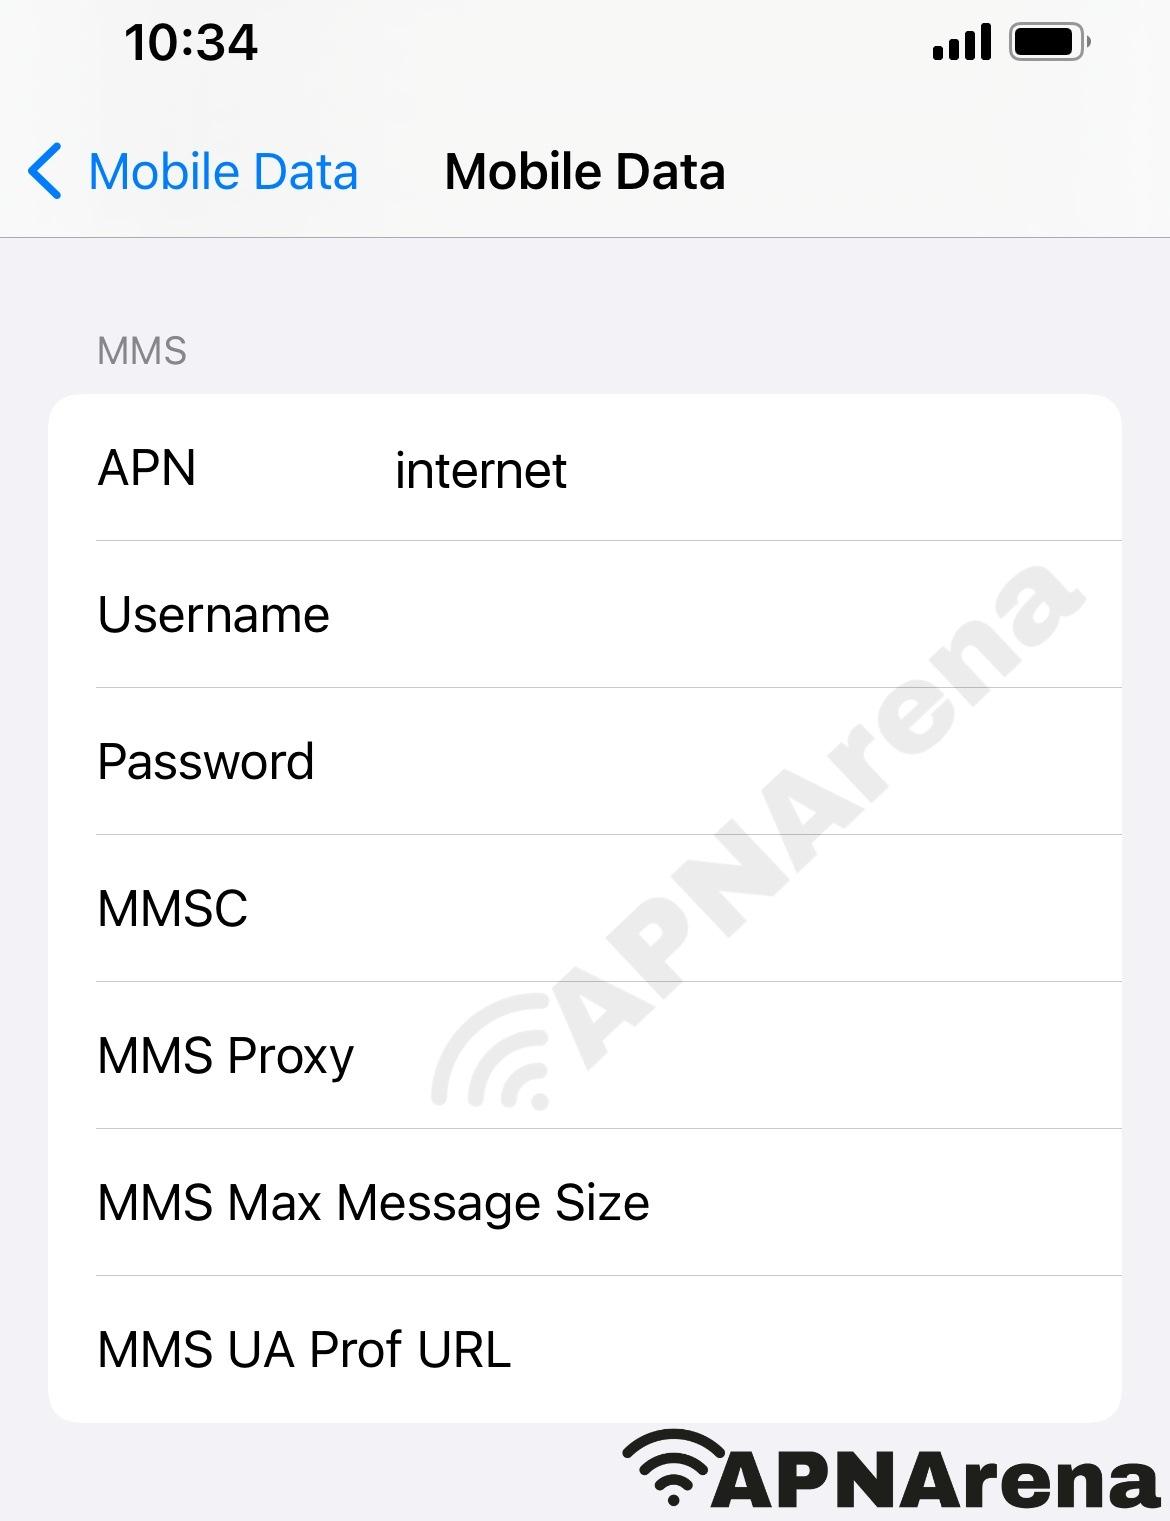 Rakuten Viber India MMS Settings for iPhone